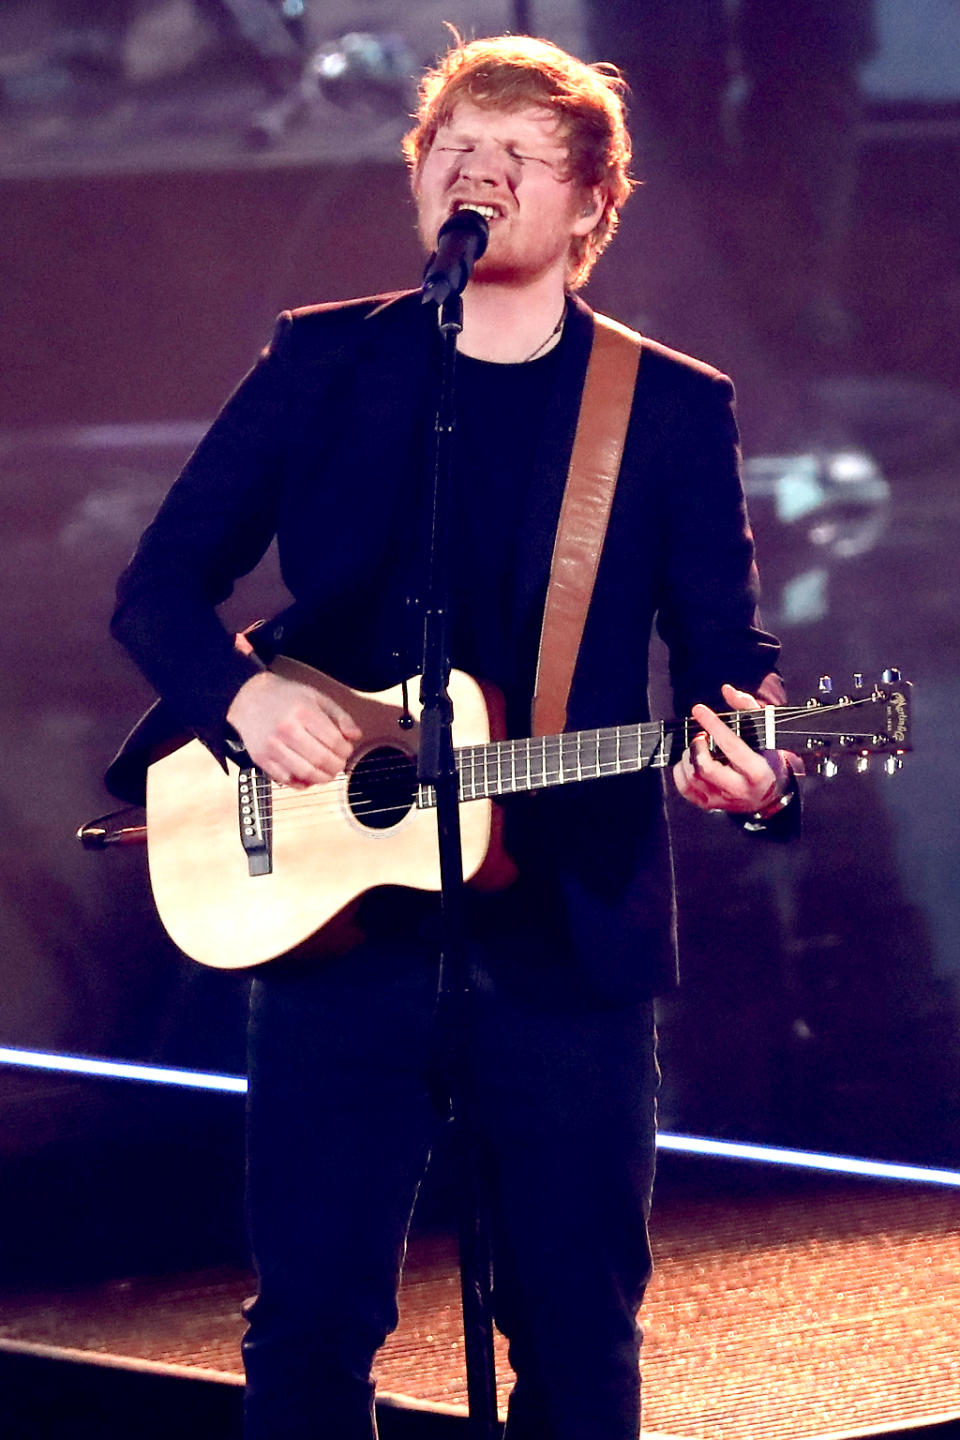 8. “Castle on the Hill,” Ed Sheeran